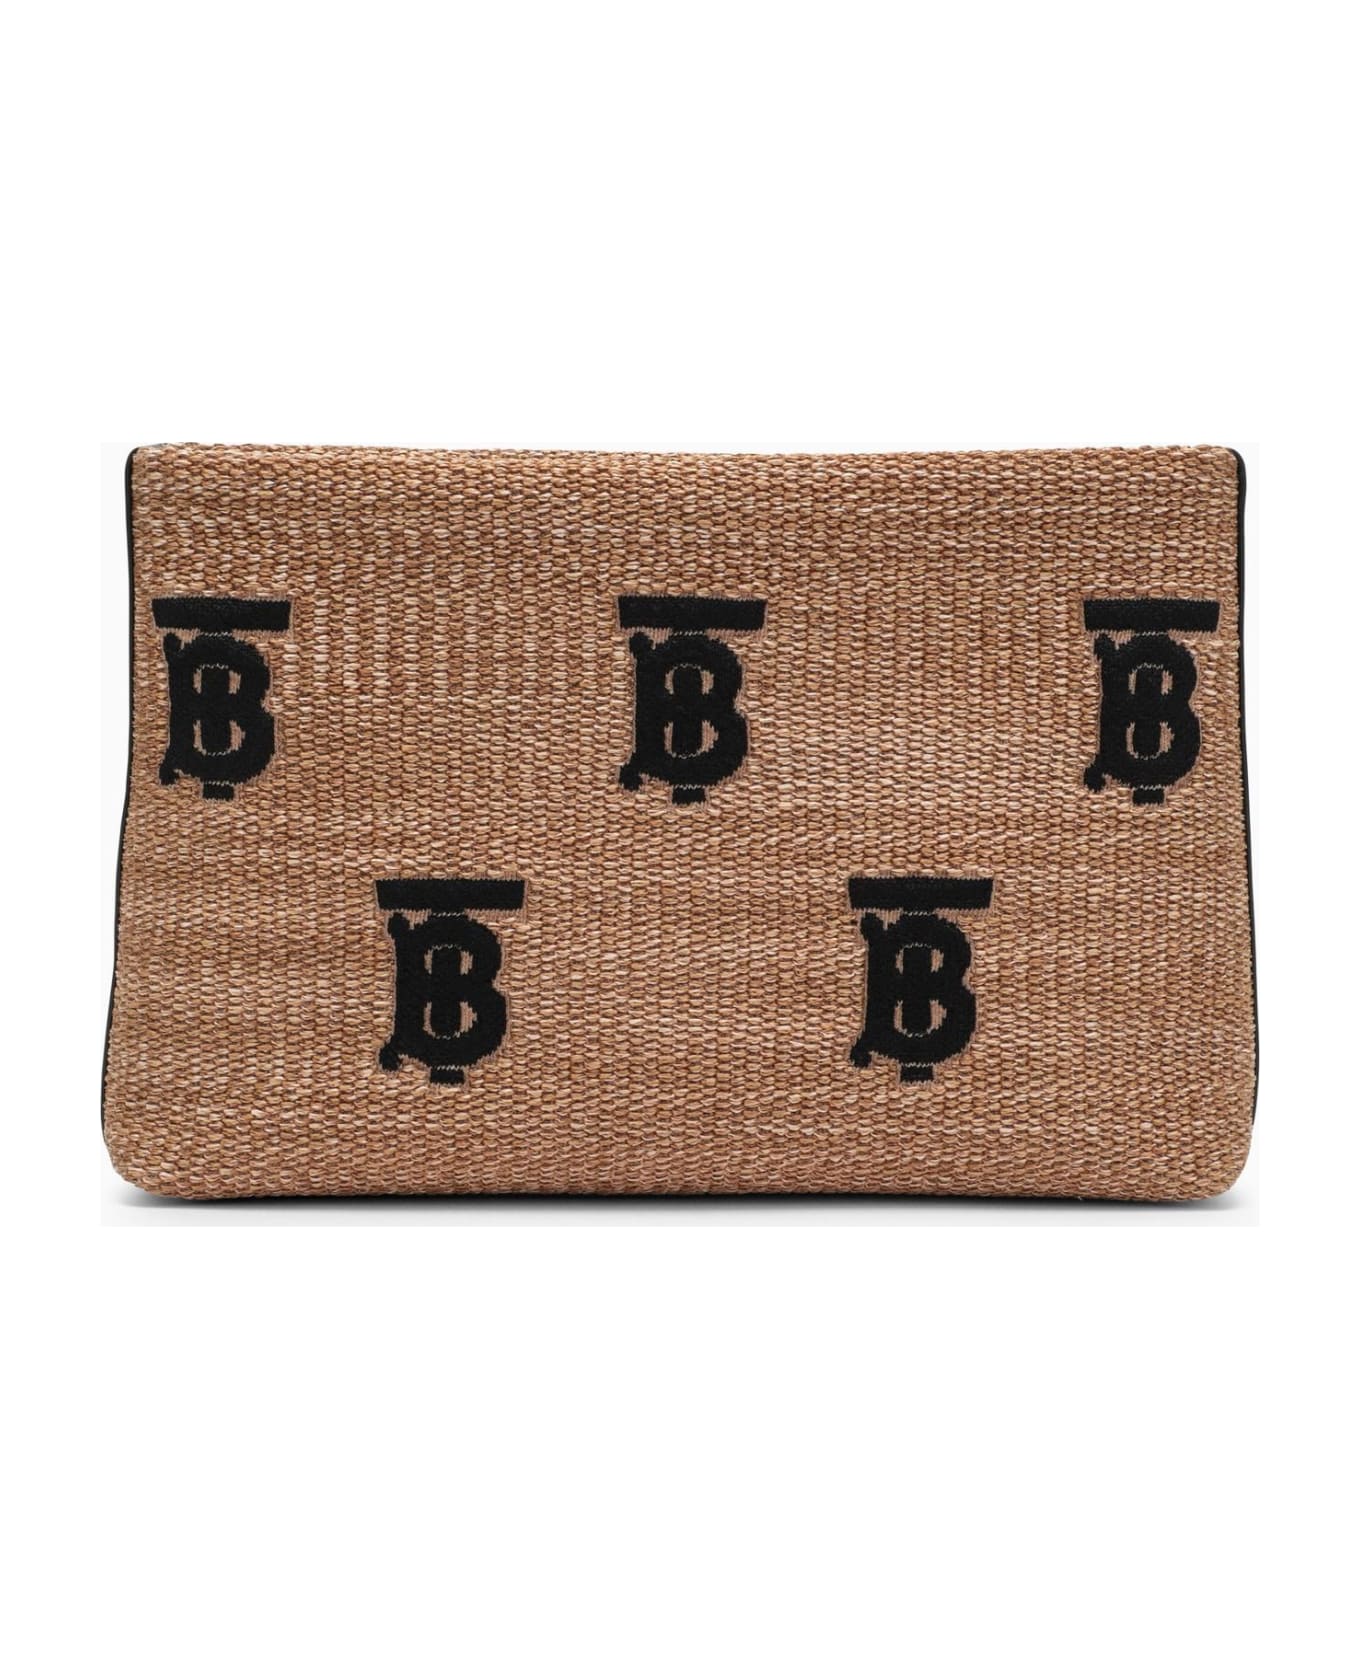 Burberry Beige Raffia Envelope With Monogram - Natural/black tb emb